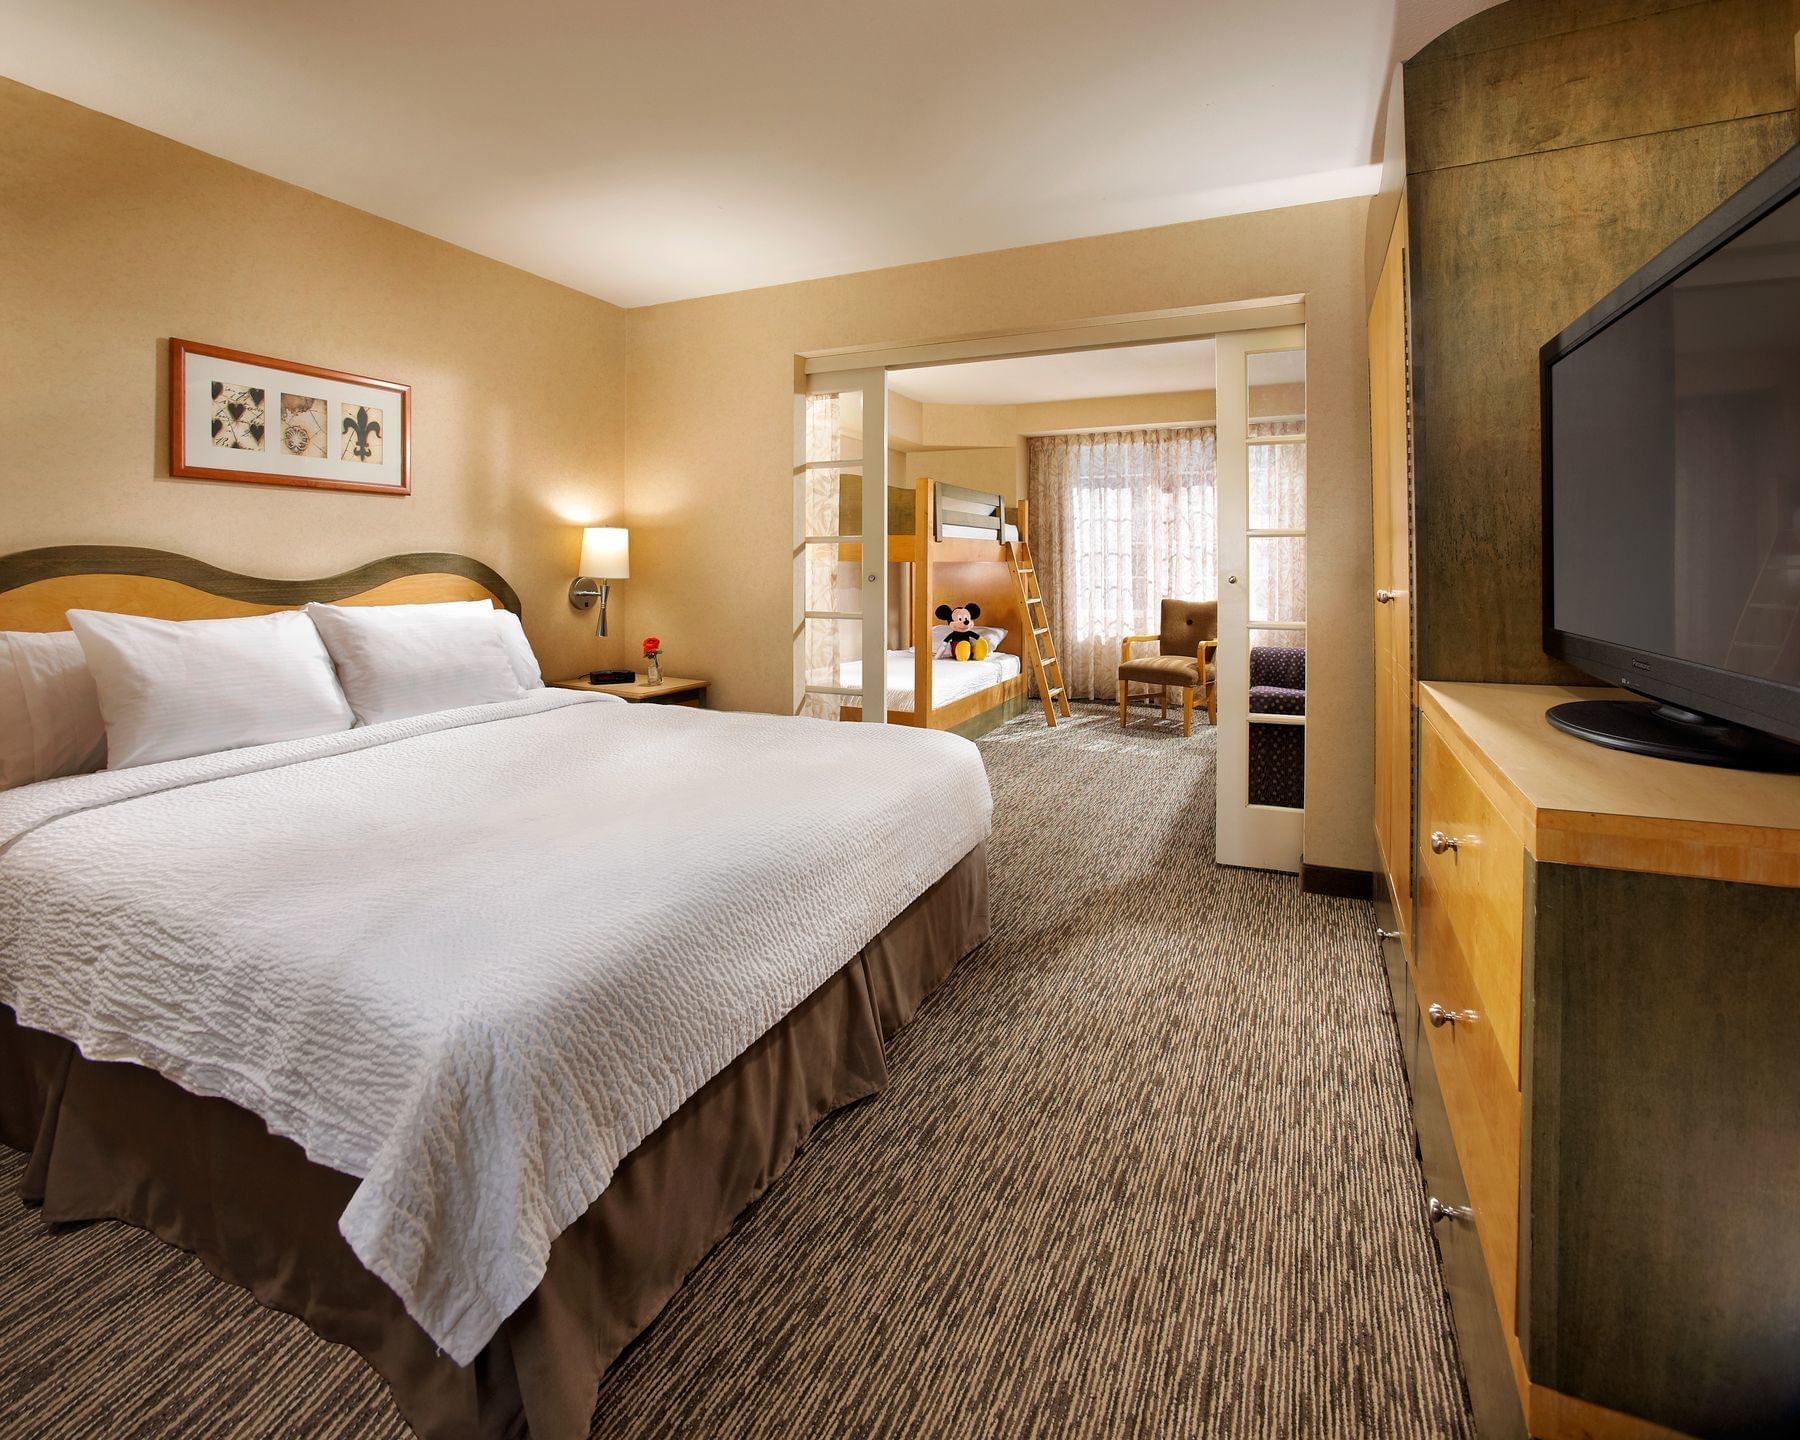 Hotels in Santa Ana, CA | Holiday Inn Express & Suites Santa Ana - Orange  County